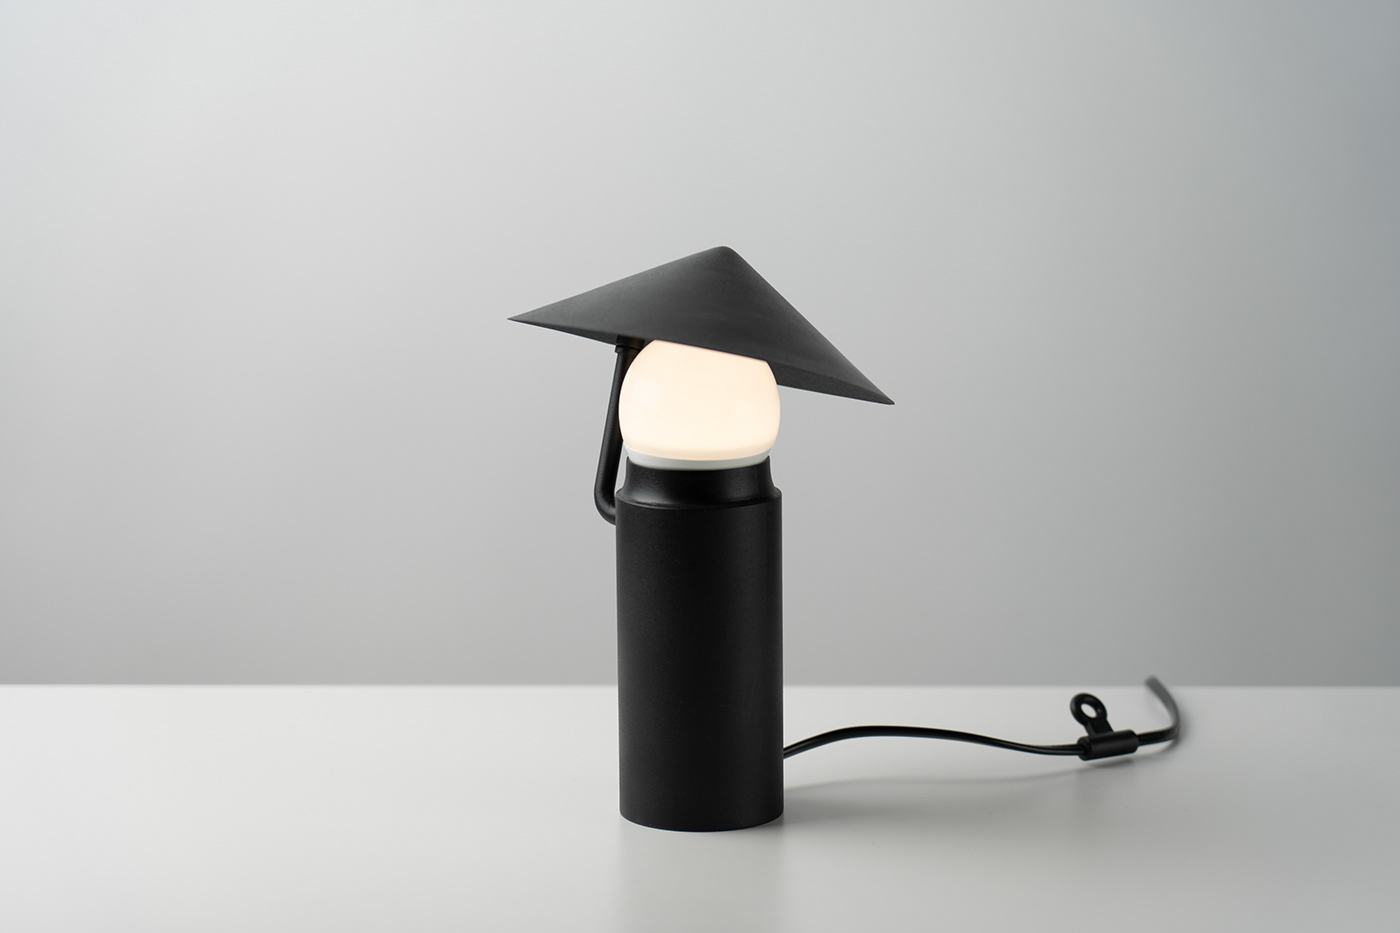 Lamp product modern Render minimal light lighting industrial design  desk table